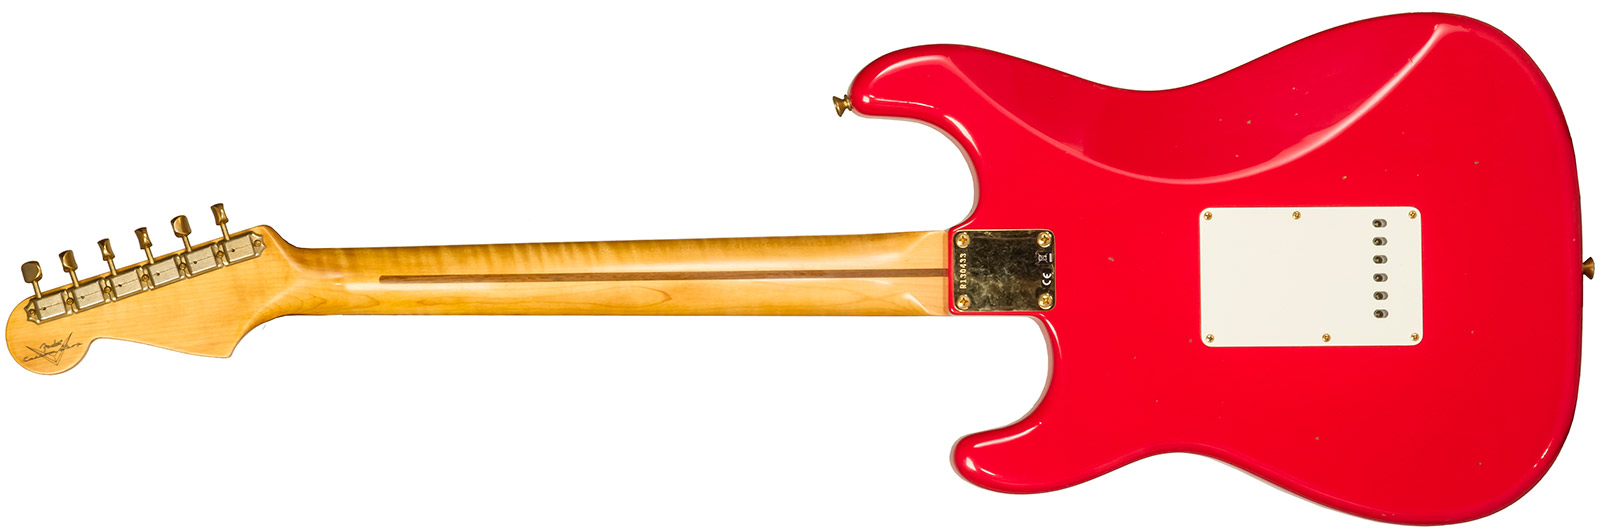 Fender Custom Shop Strat 1956 3s Trem Mn #r130433 - Journeyman Relic Fiesta Red - Guitarra eléctrica con forma de str. - Variation 1